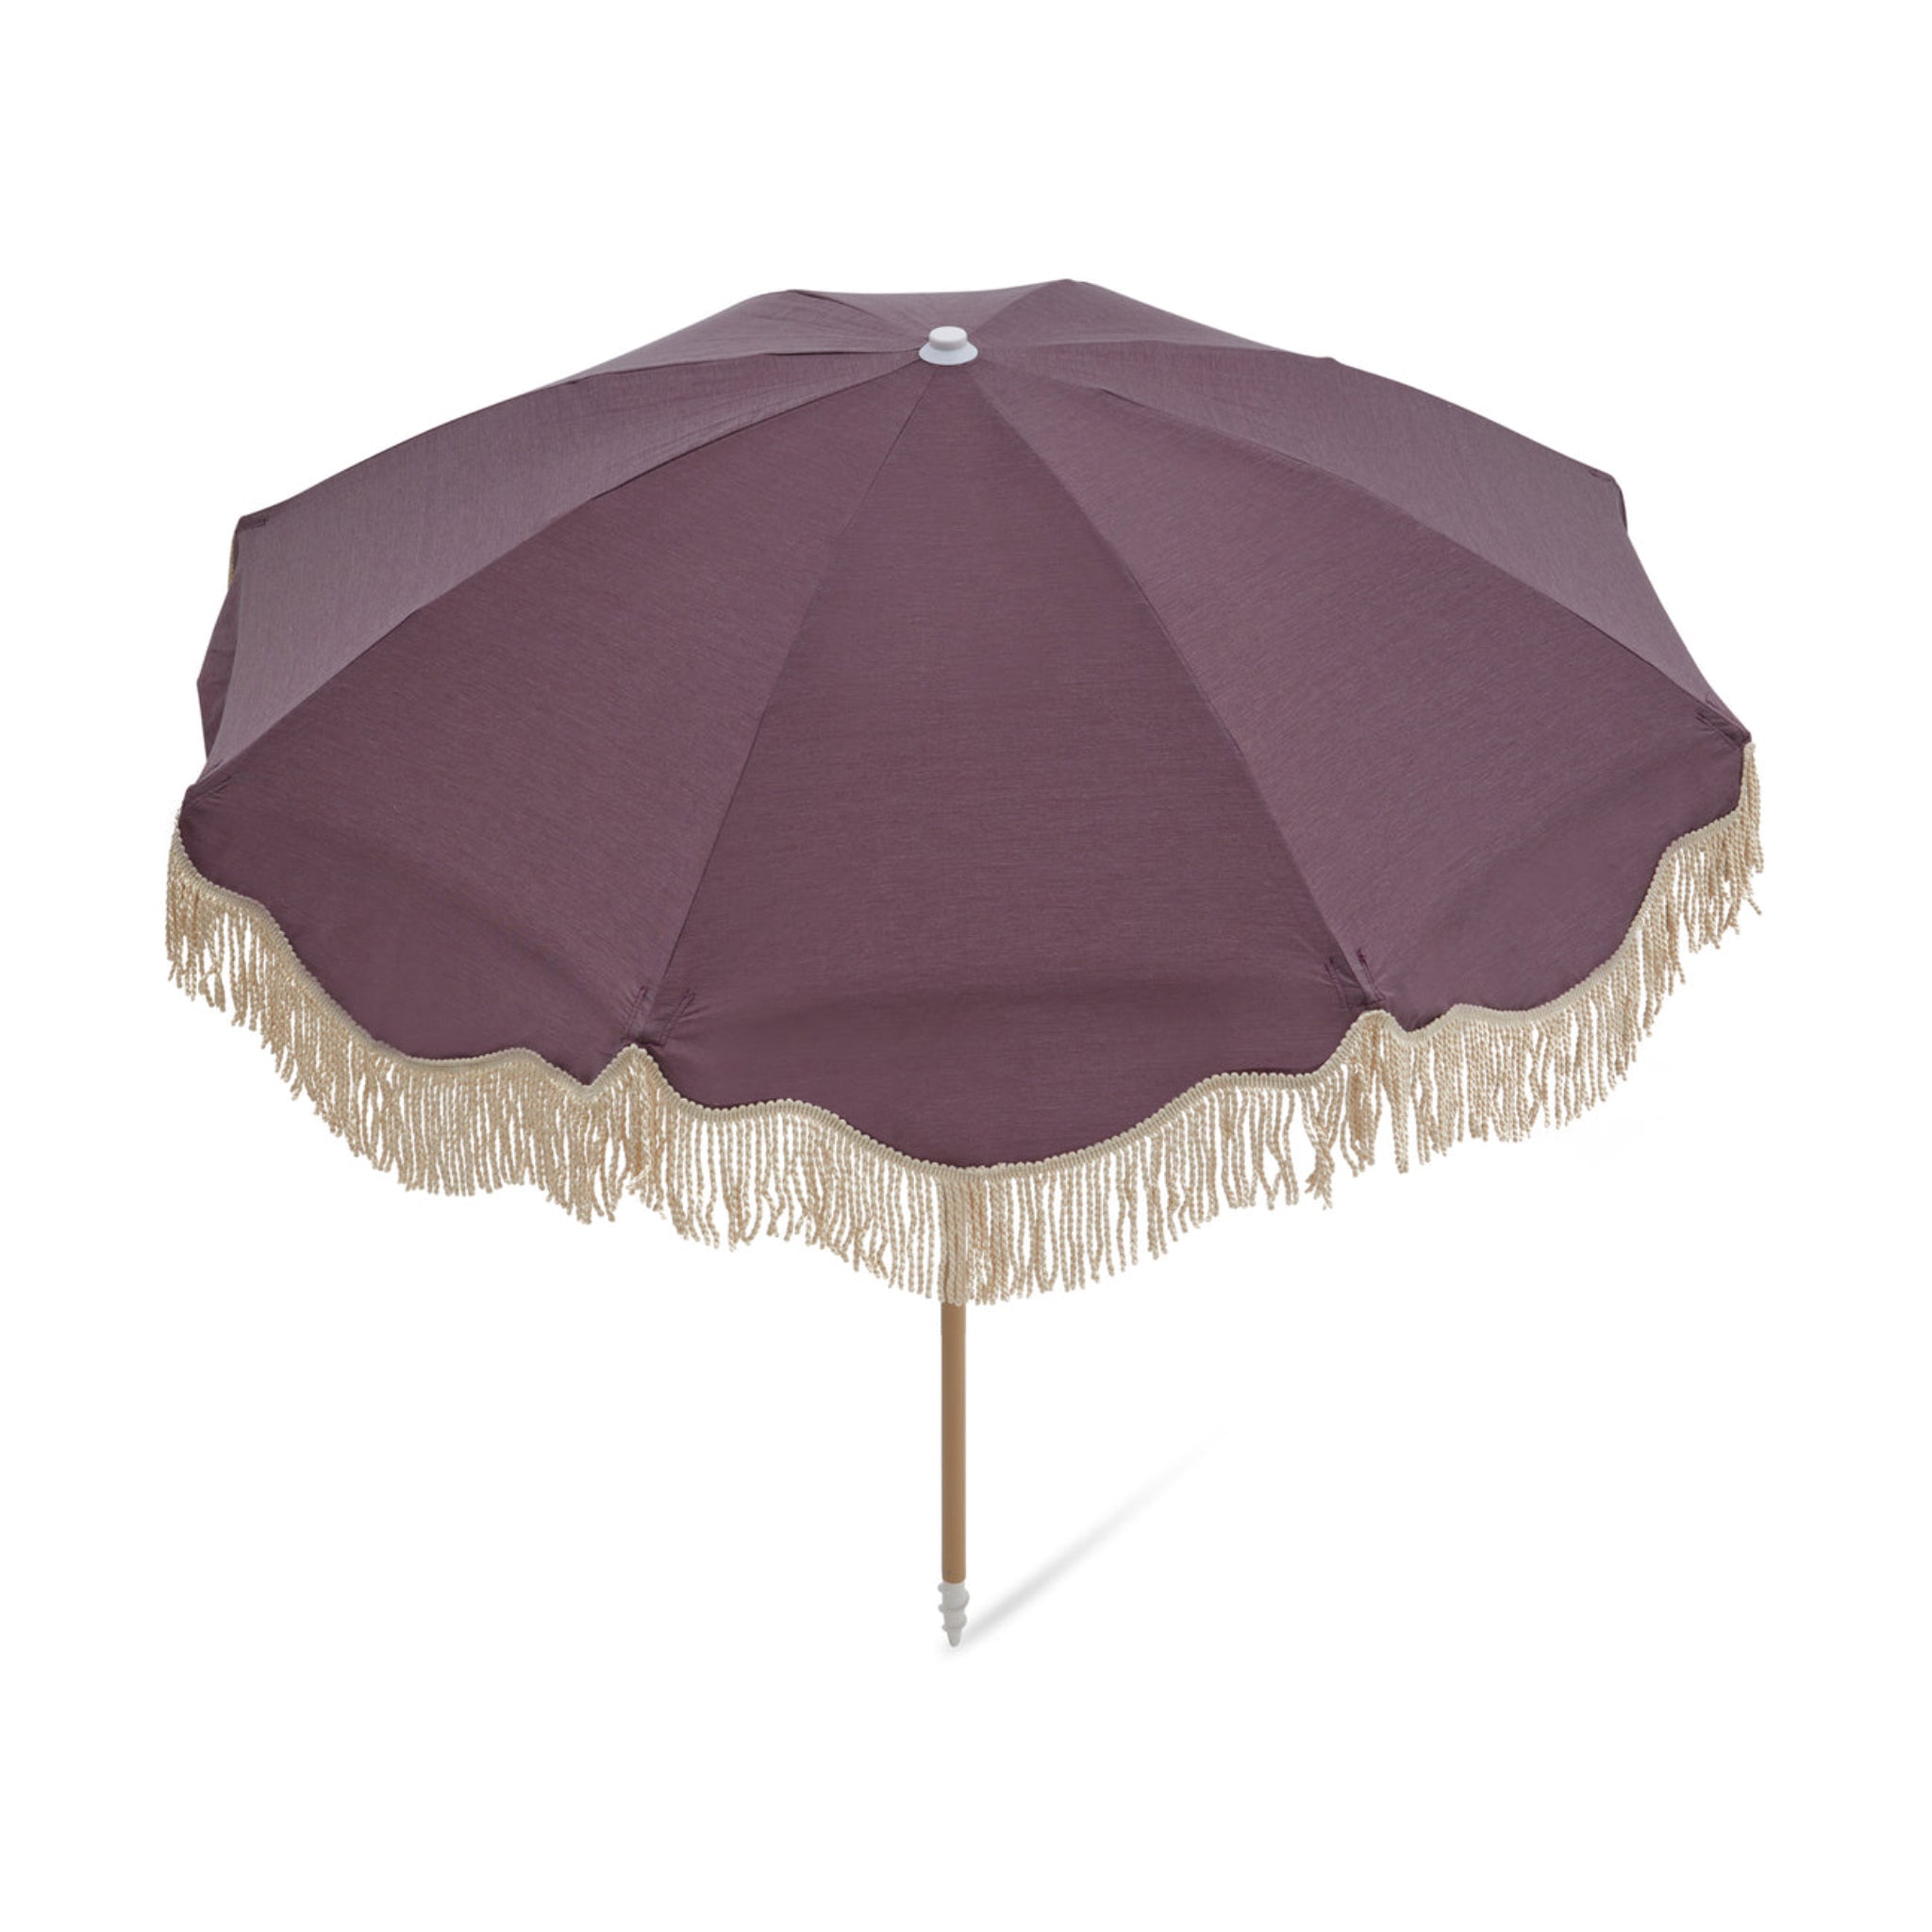 Salty Shadows Passion Beach Umbrella